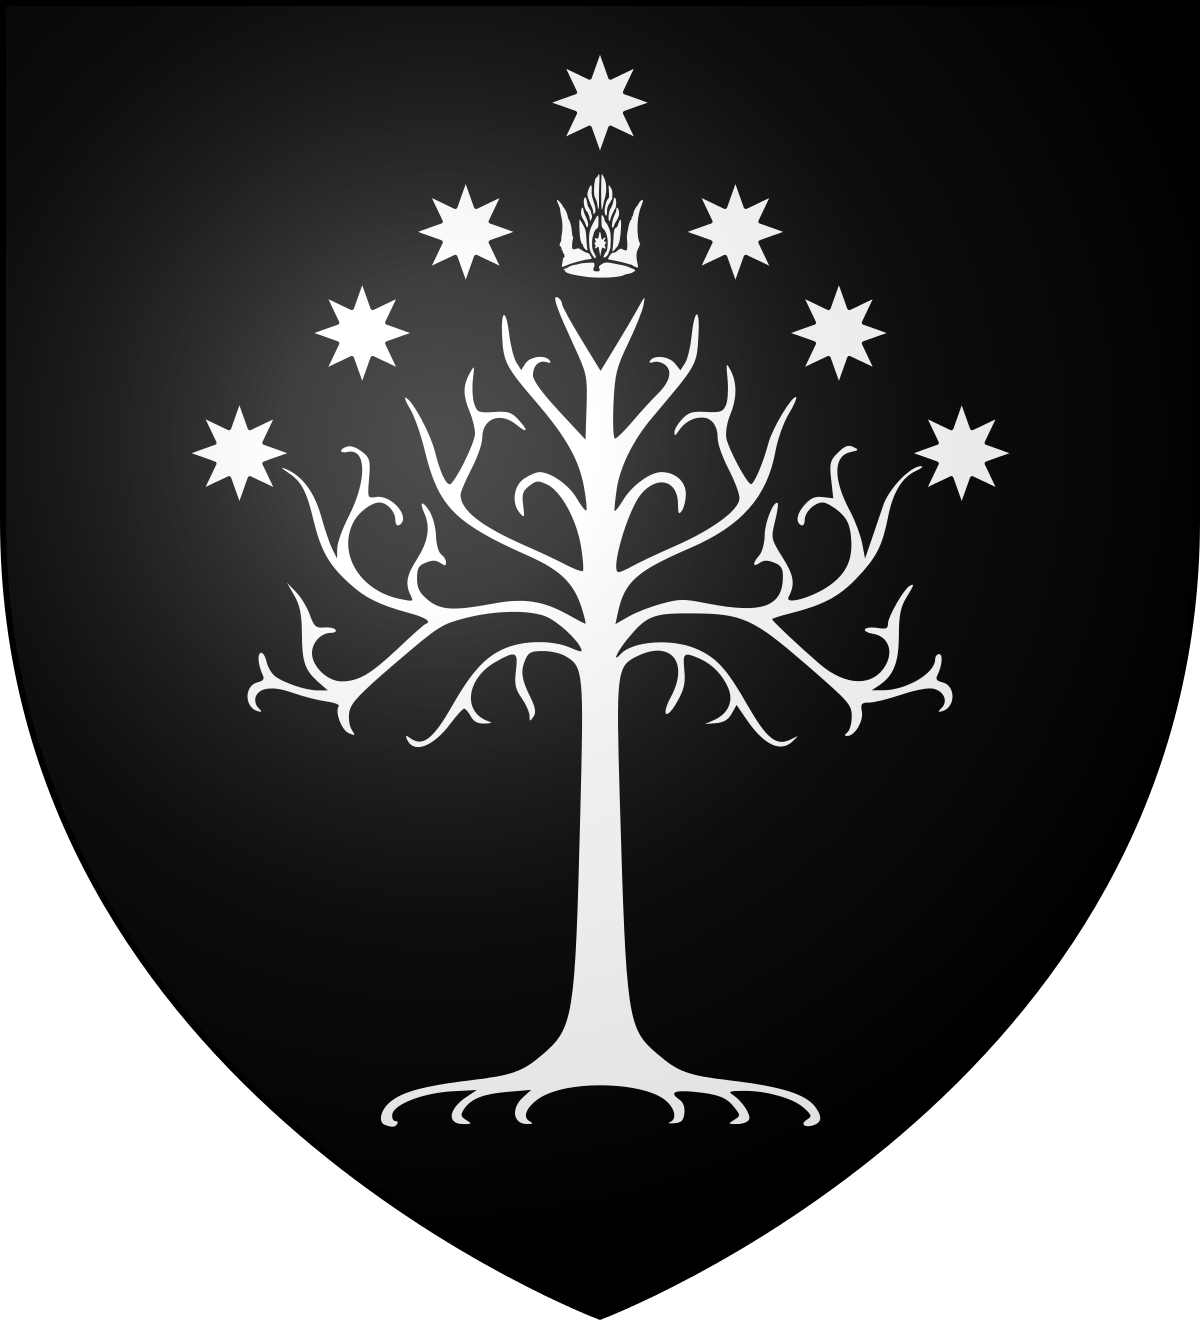 Black and White Tree in Circle Logo - White Tree of Gondor